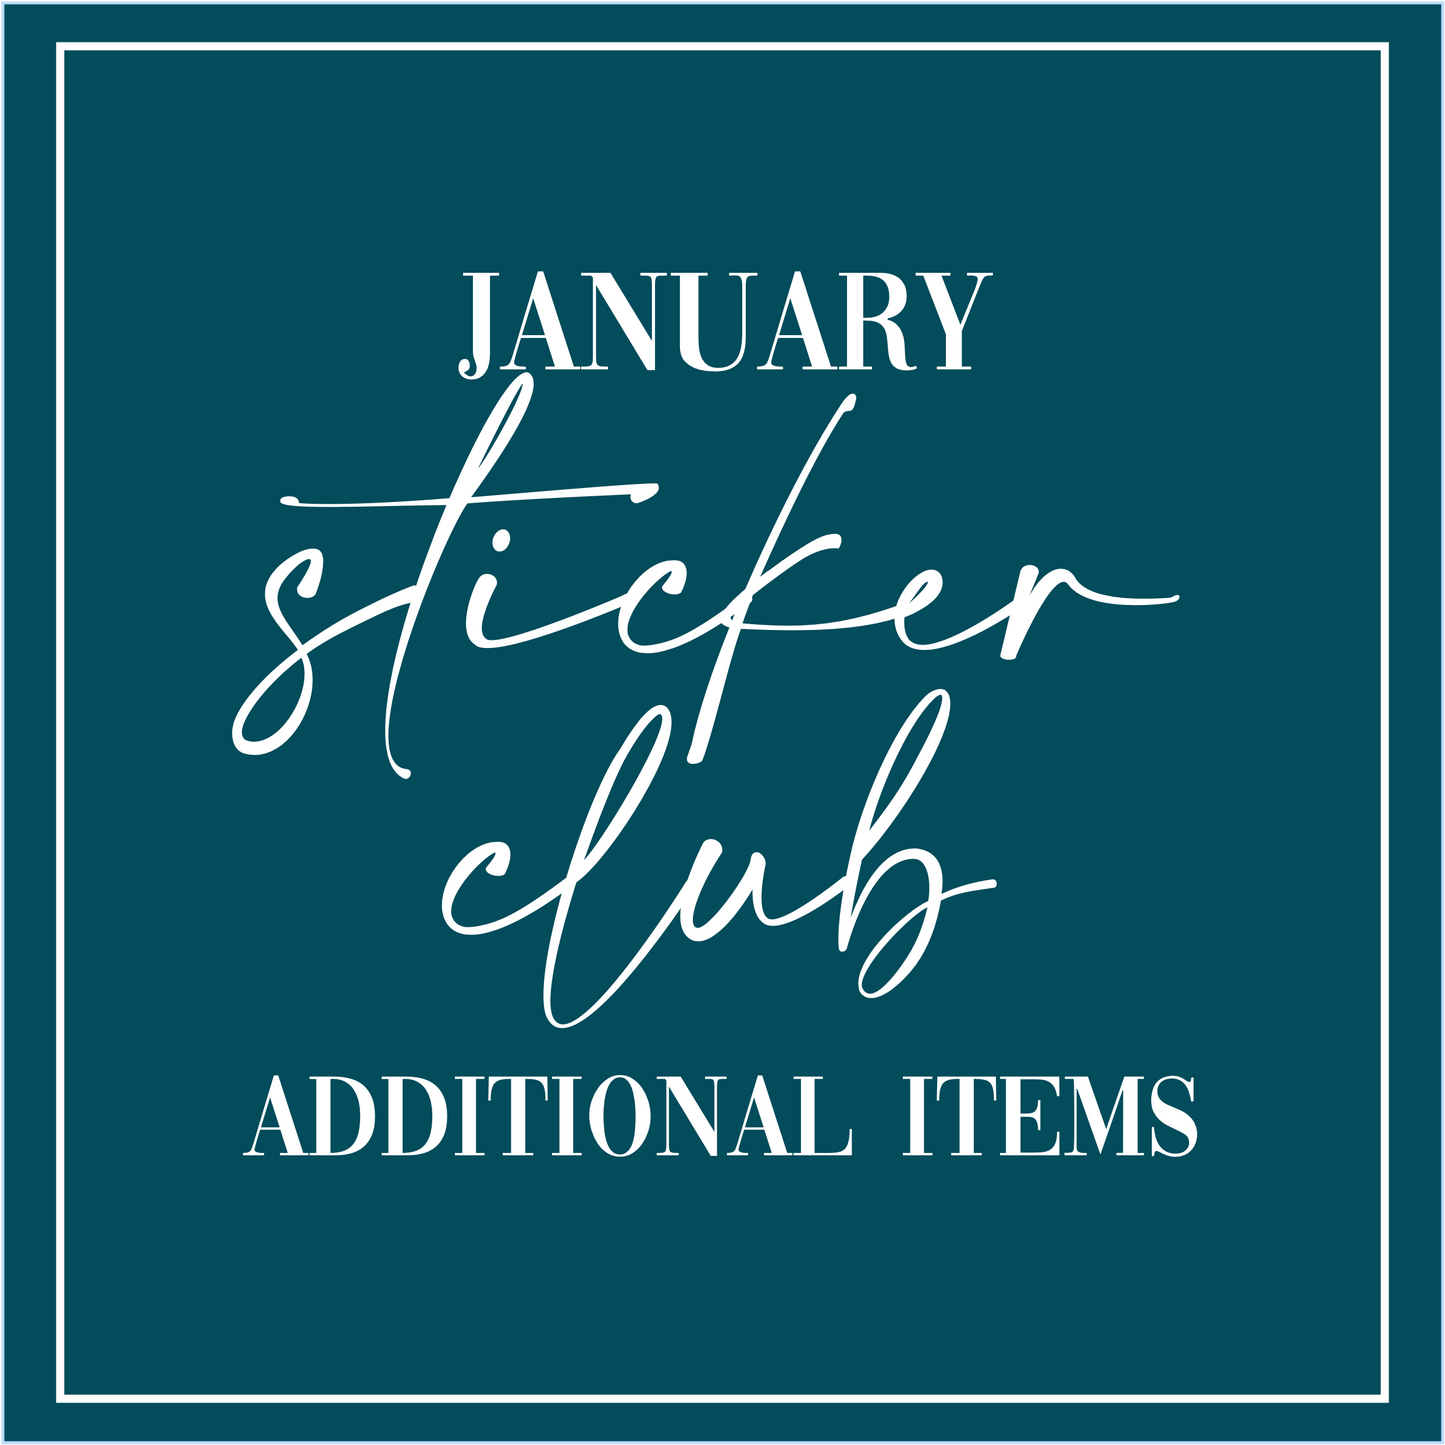 January - Sticker Club - Additional items